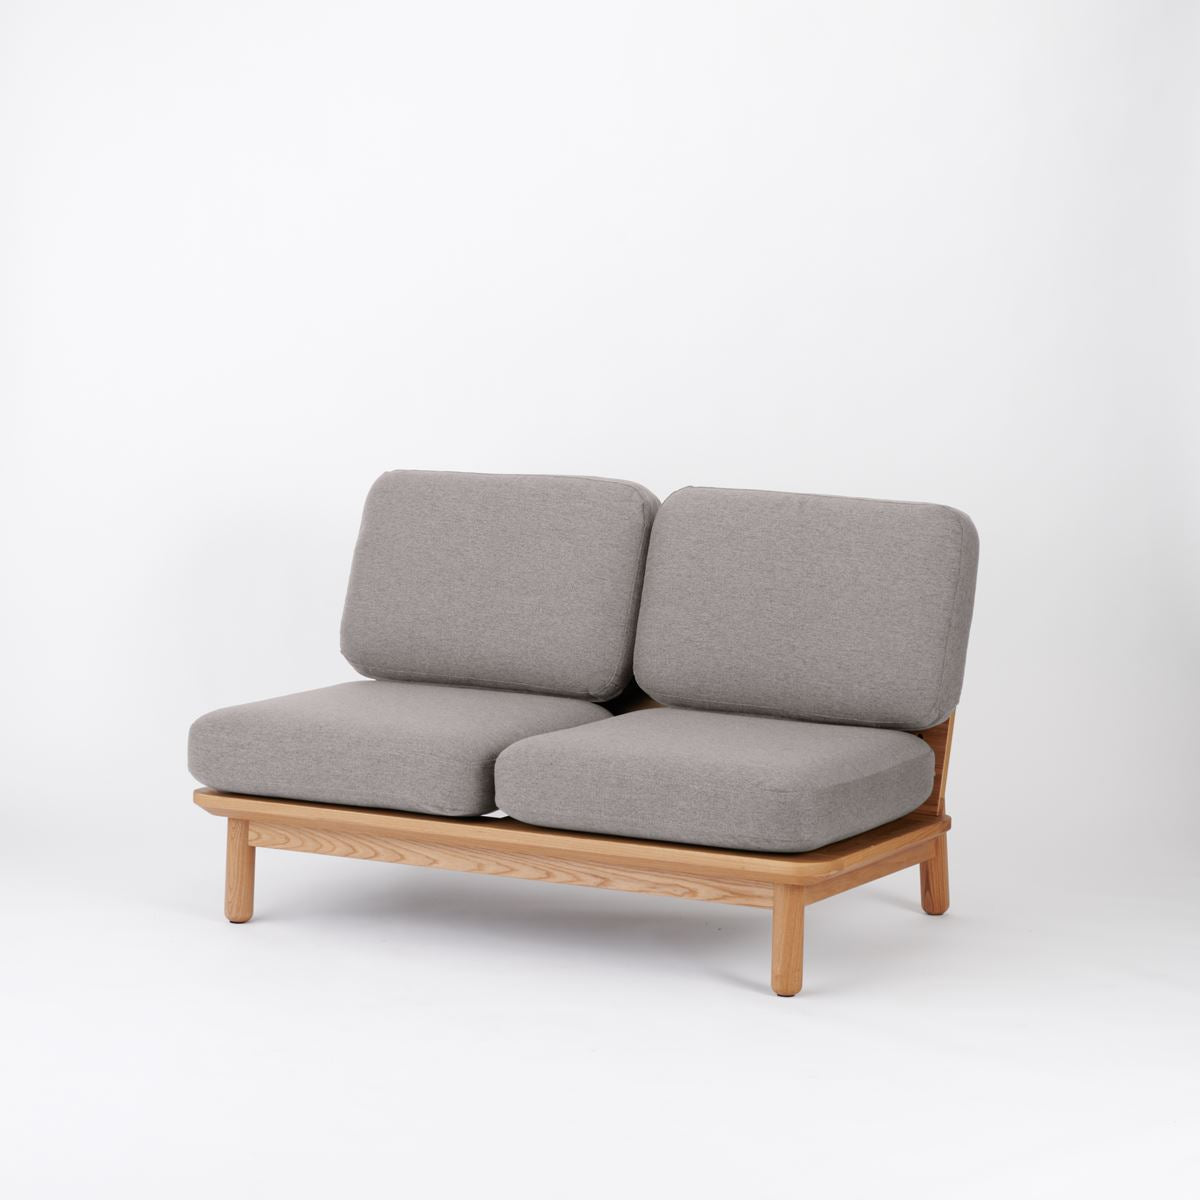 KUUM  Sofa 2 seater - Wooden Frame/Natural / クーム ソファ